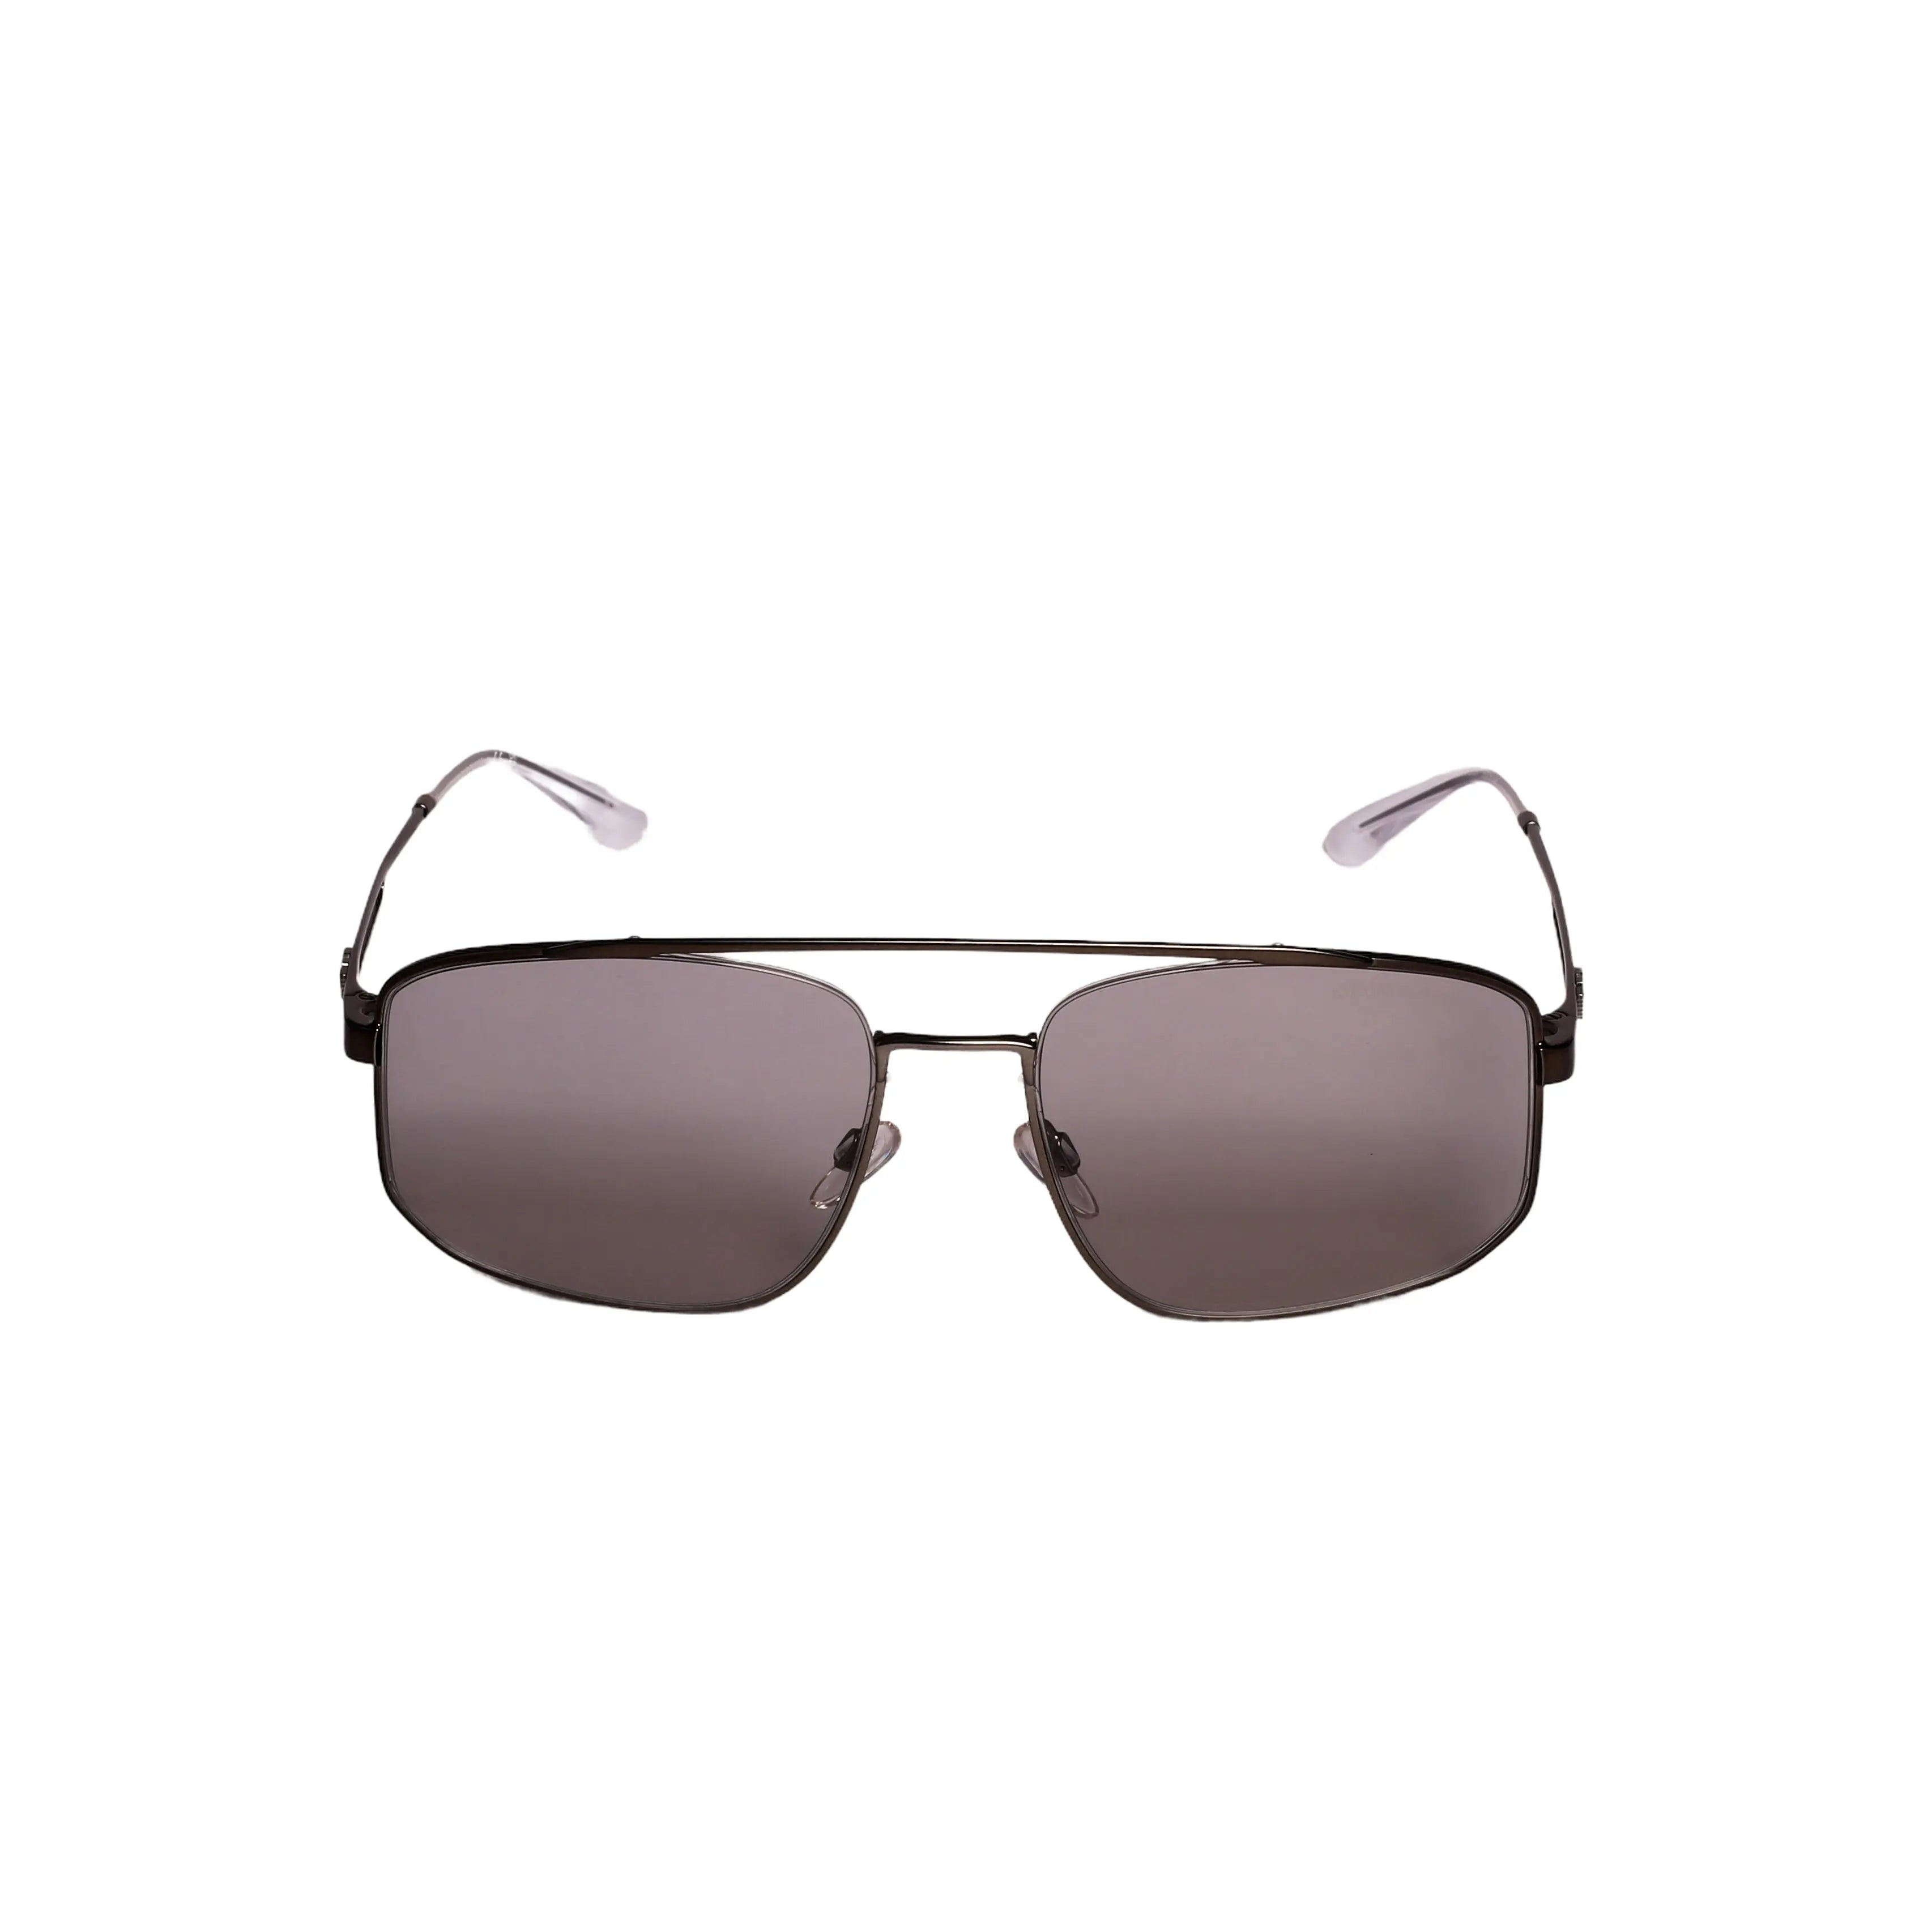 Emporio Armani-EA2139-57-3045 Sunglasses - Premium Sunglasses from Emporio Armani - Just Rs. 12790! Shop now at Laxmi Opticians